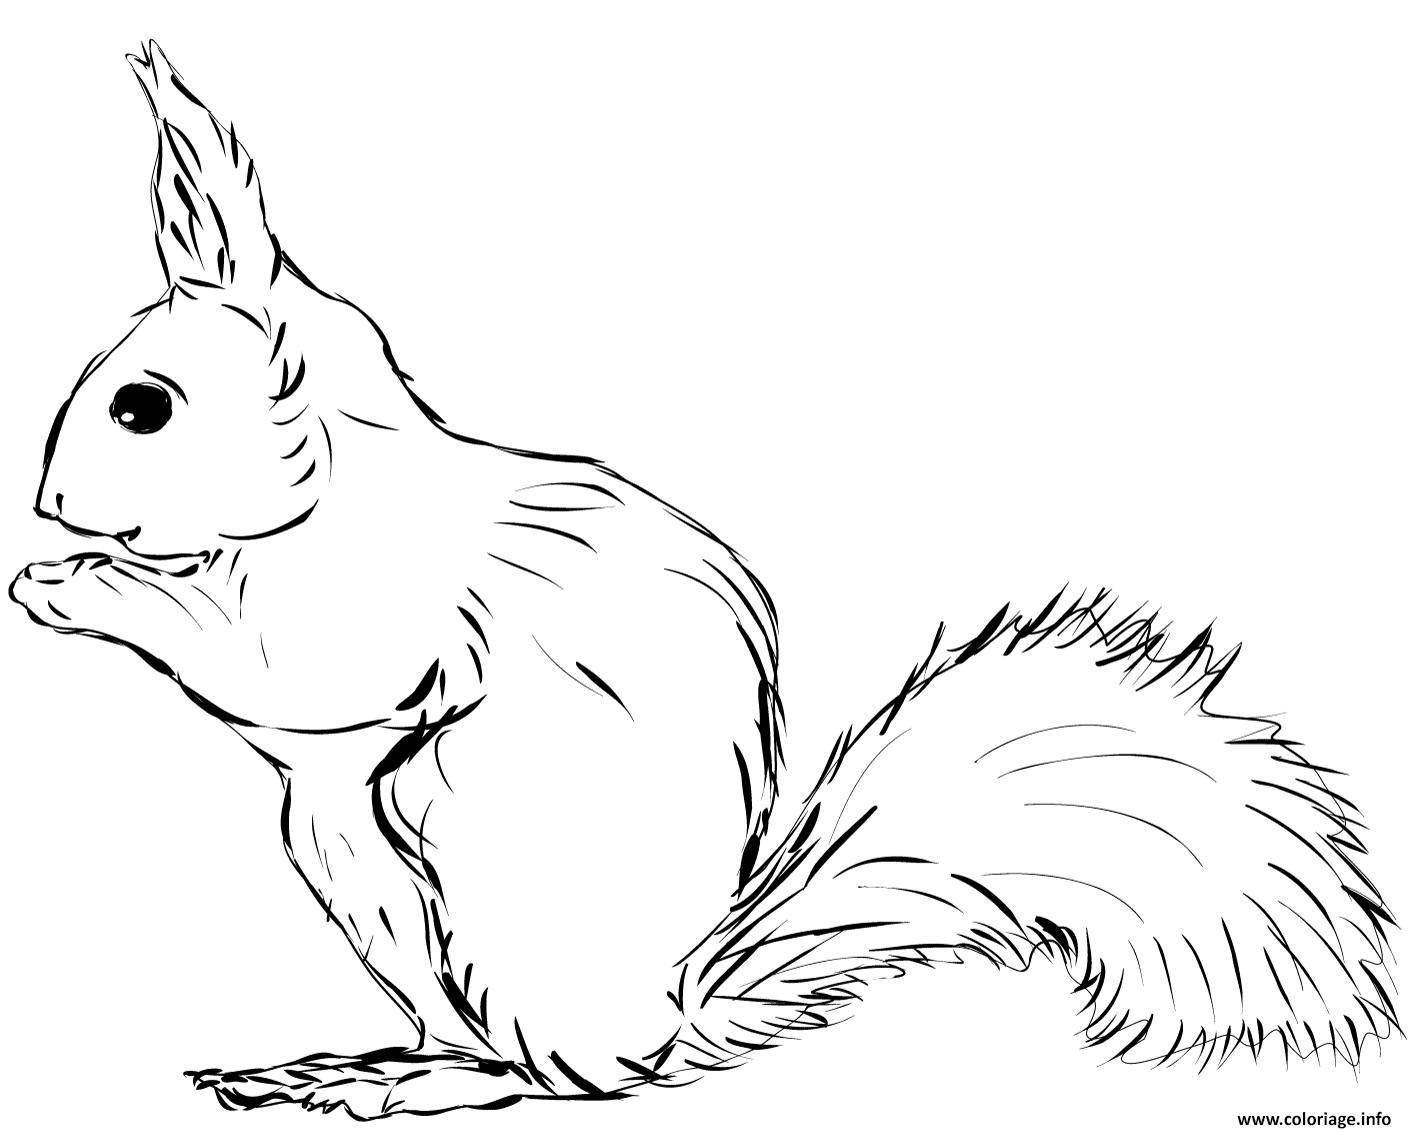 Dessin ecureuil realiste petit animal Coloriage Gratuit à Imprimer